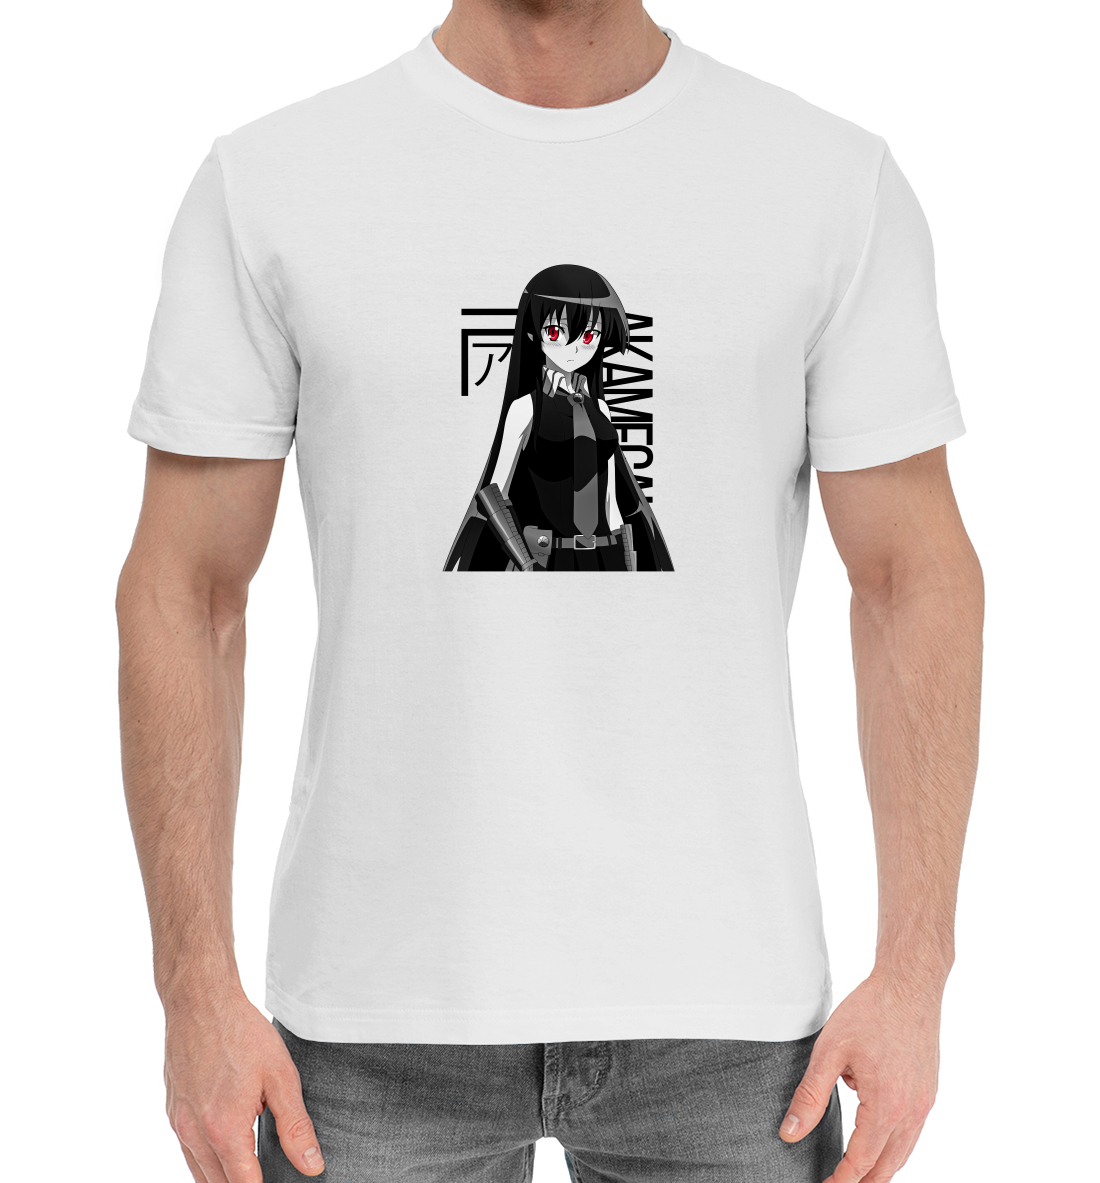 Мужская Хлопковая футболка с принтом Убийца Акамэ, артикул ANR-506748-hfu-2mp